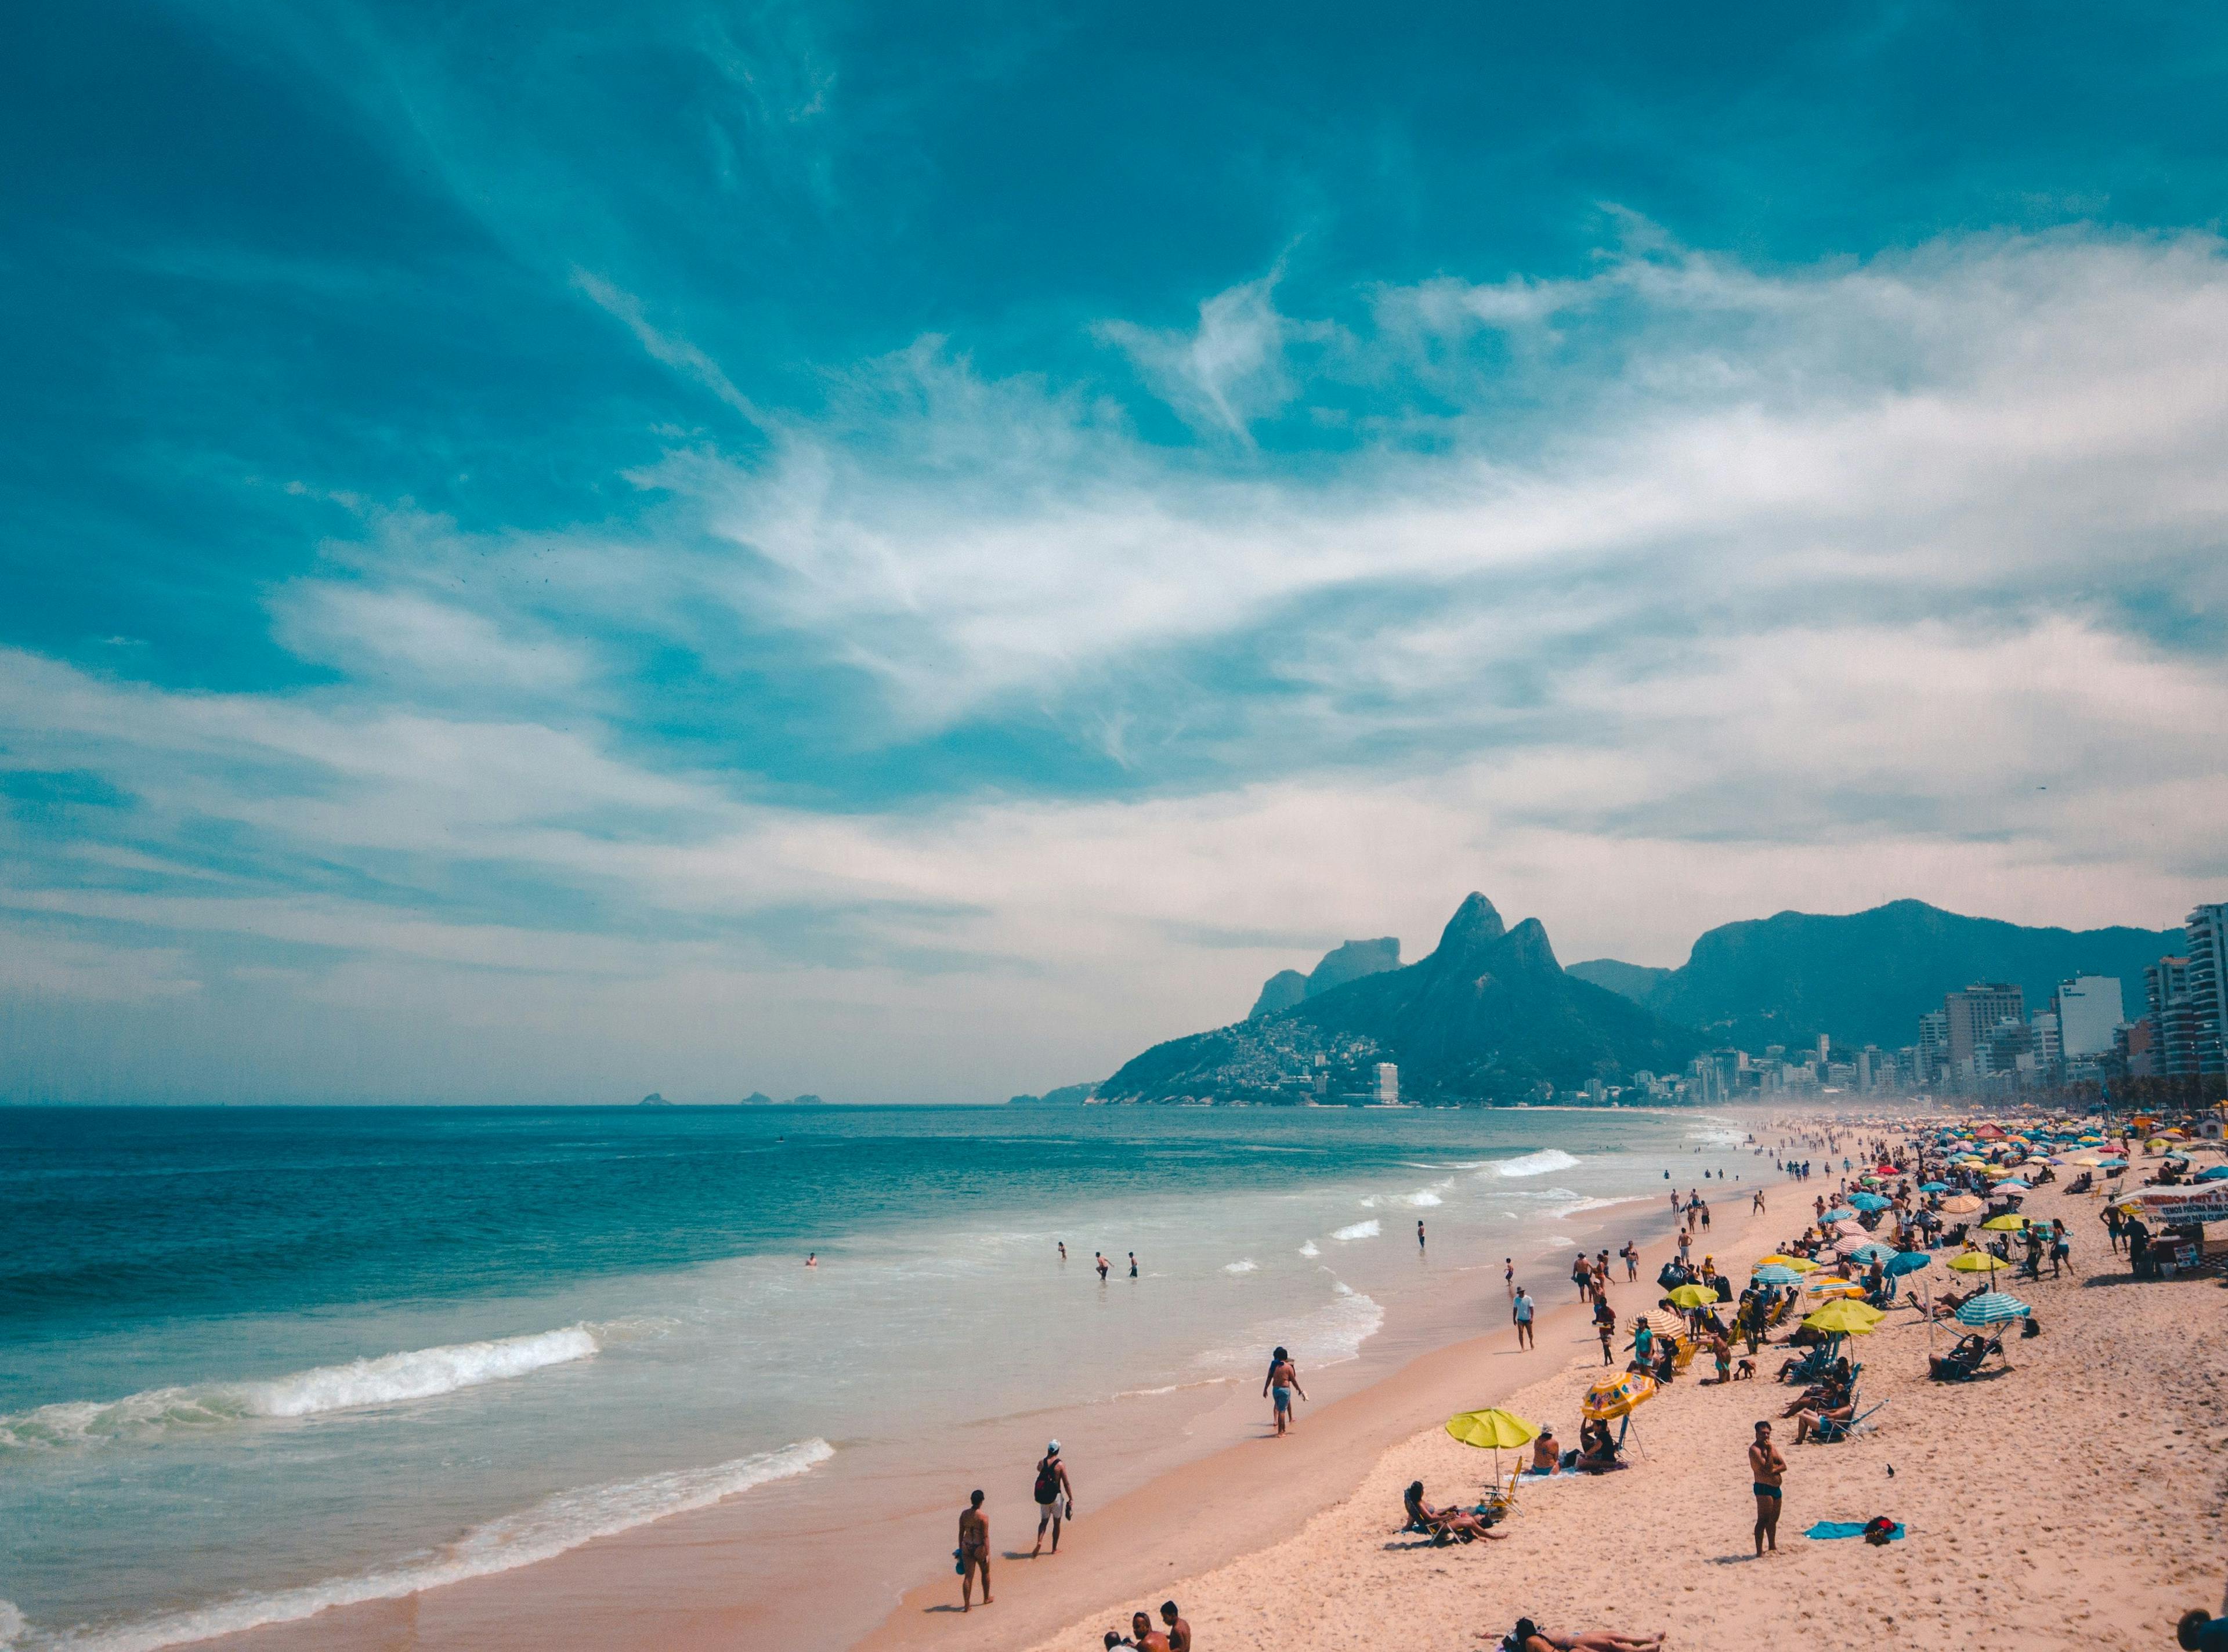 Beach in Rio de Janeiro in Brazil.